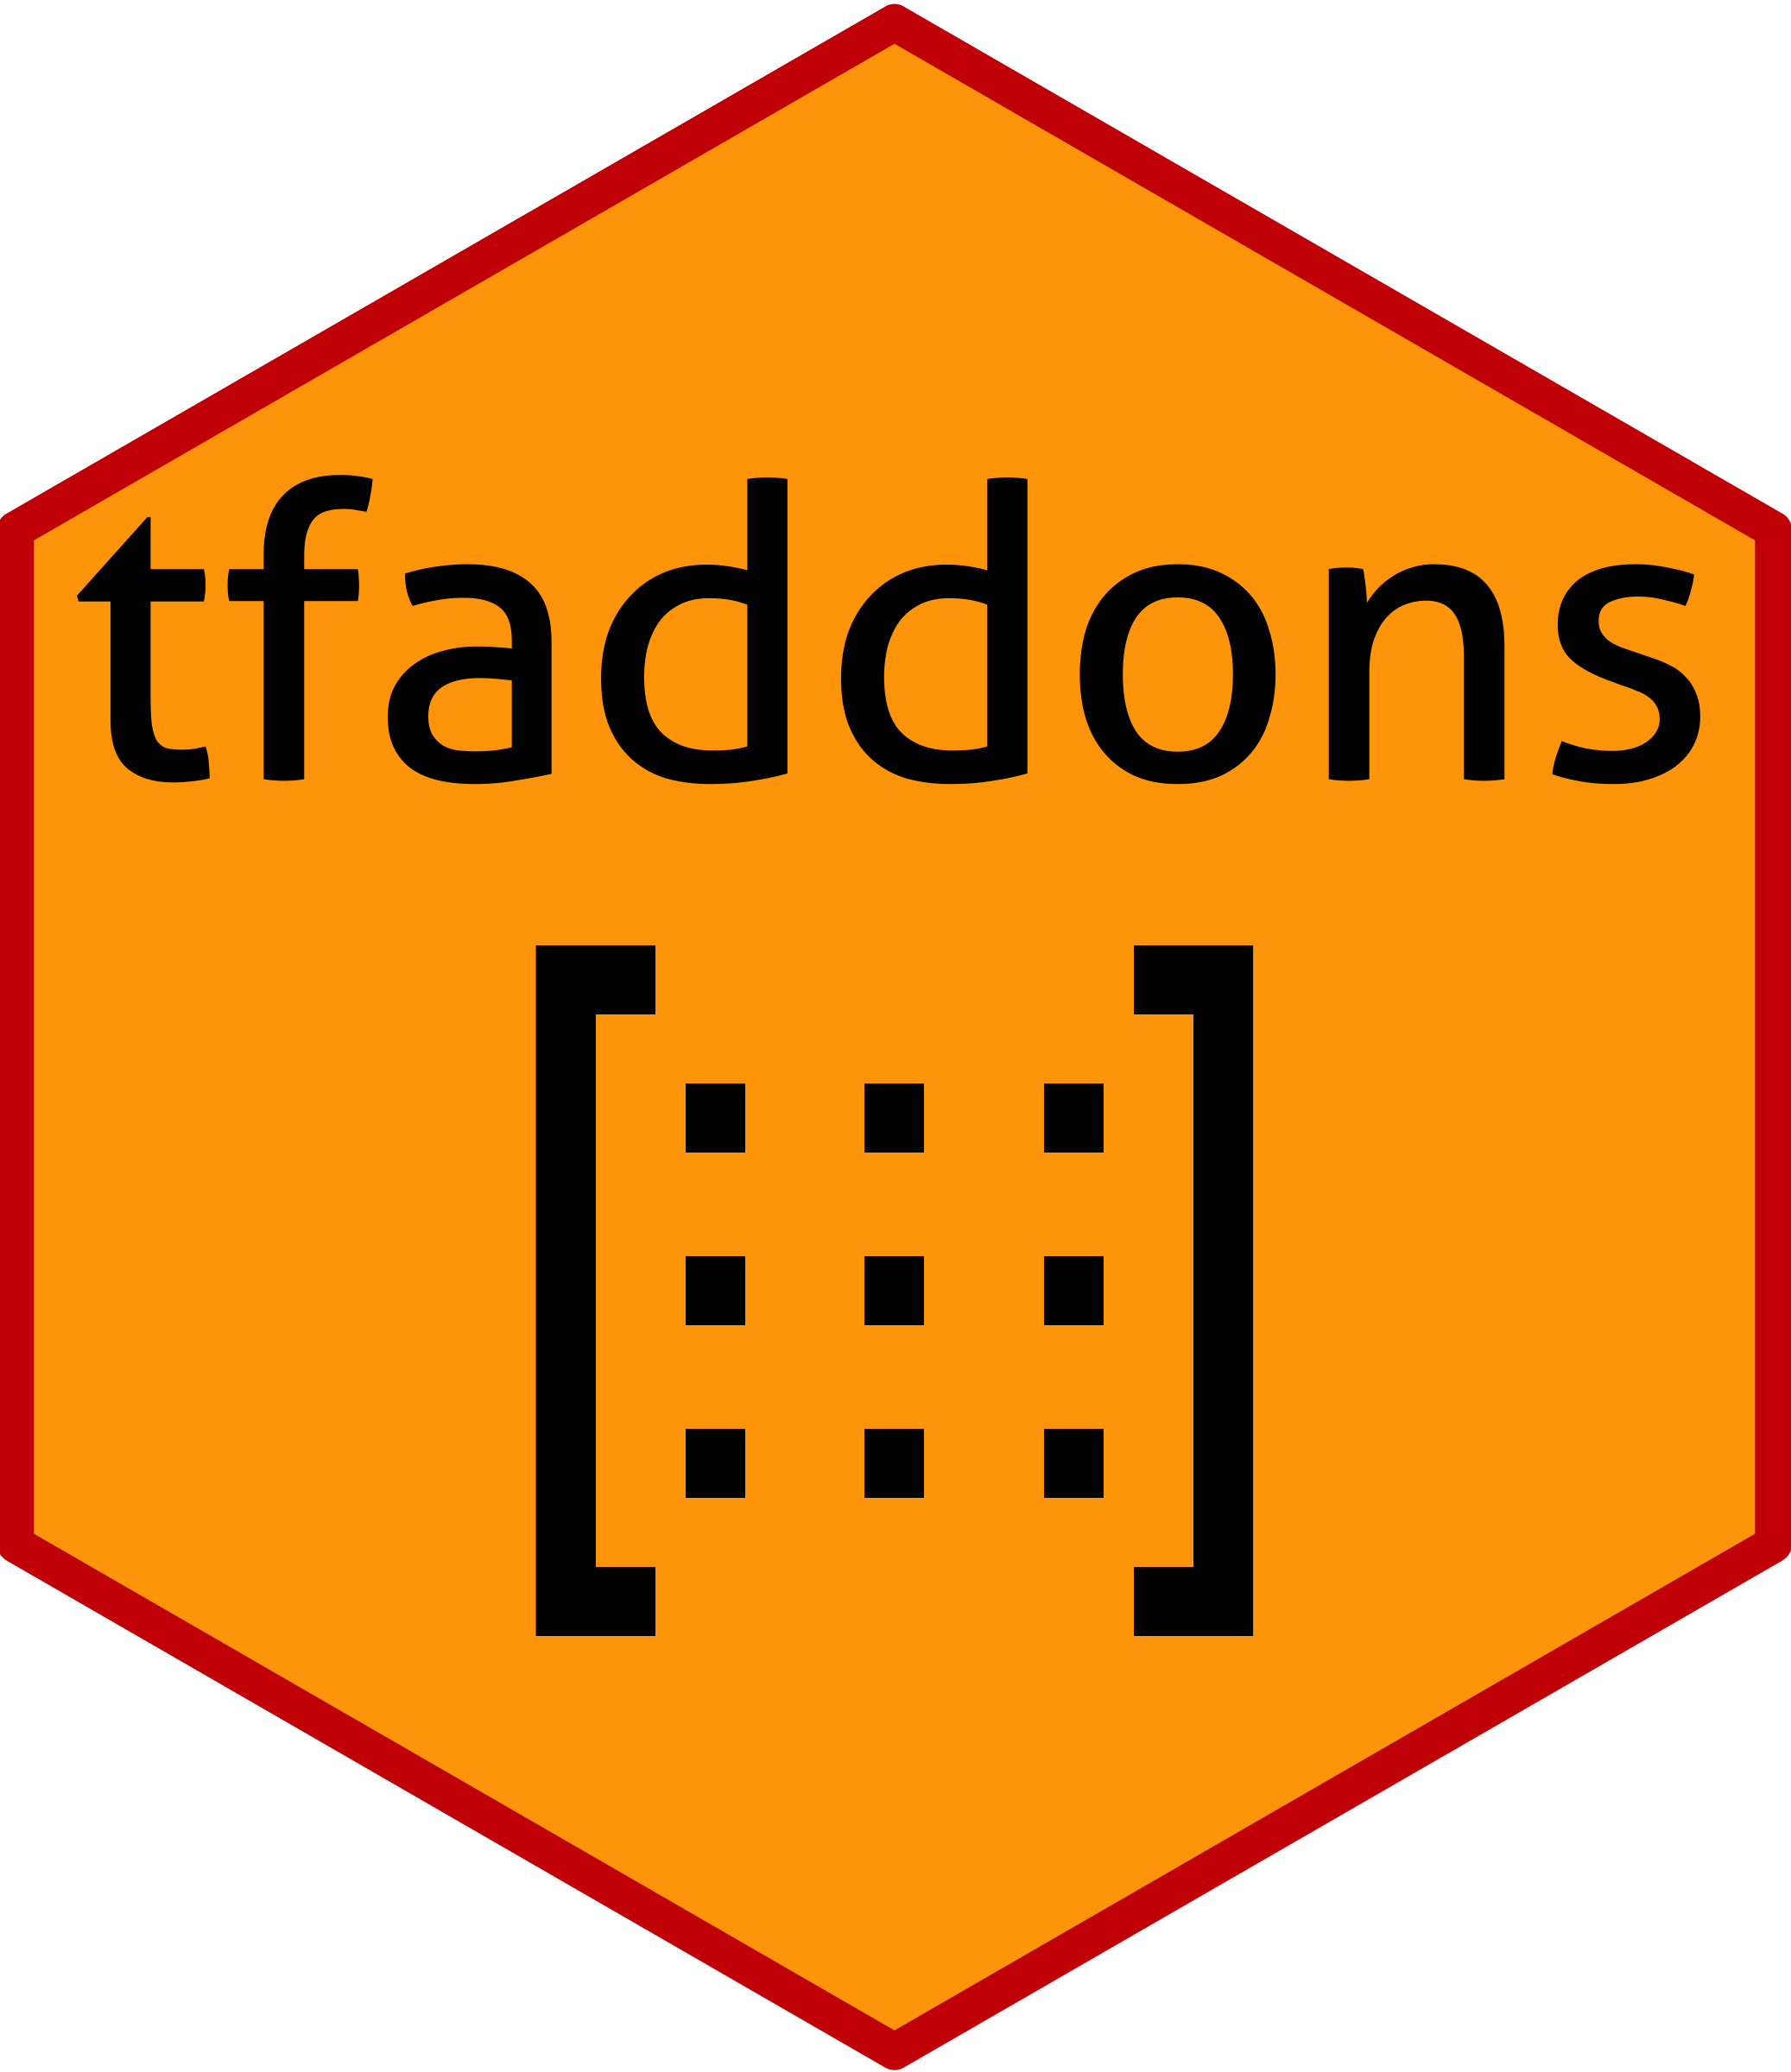 TF-addons